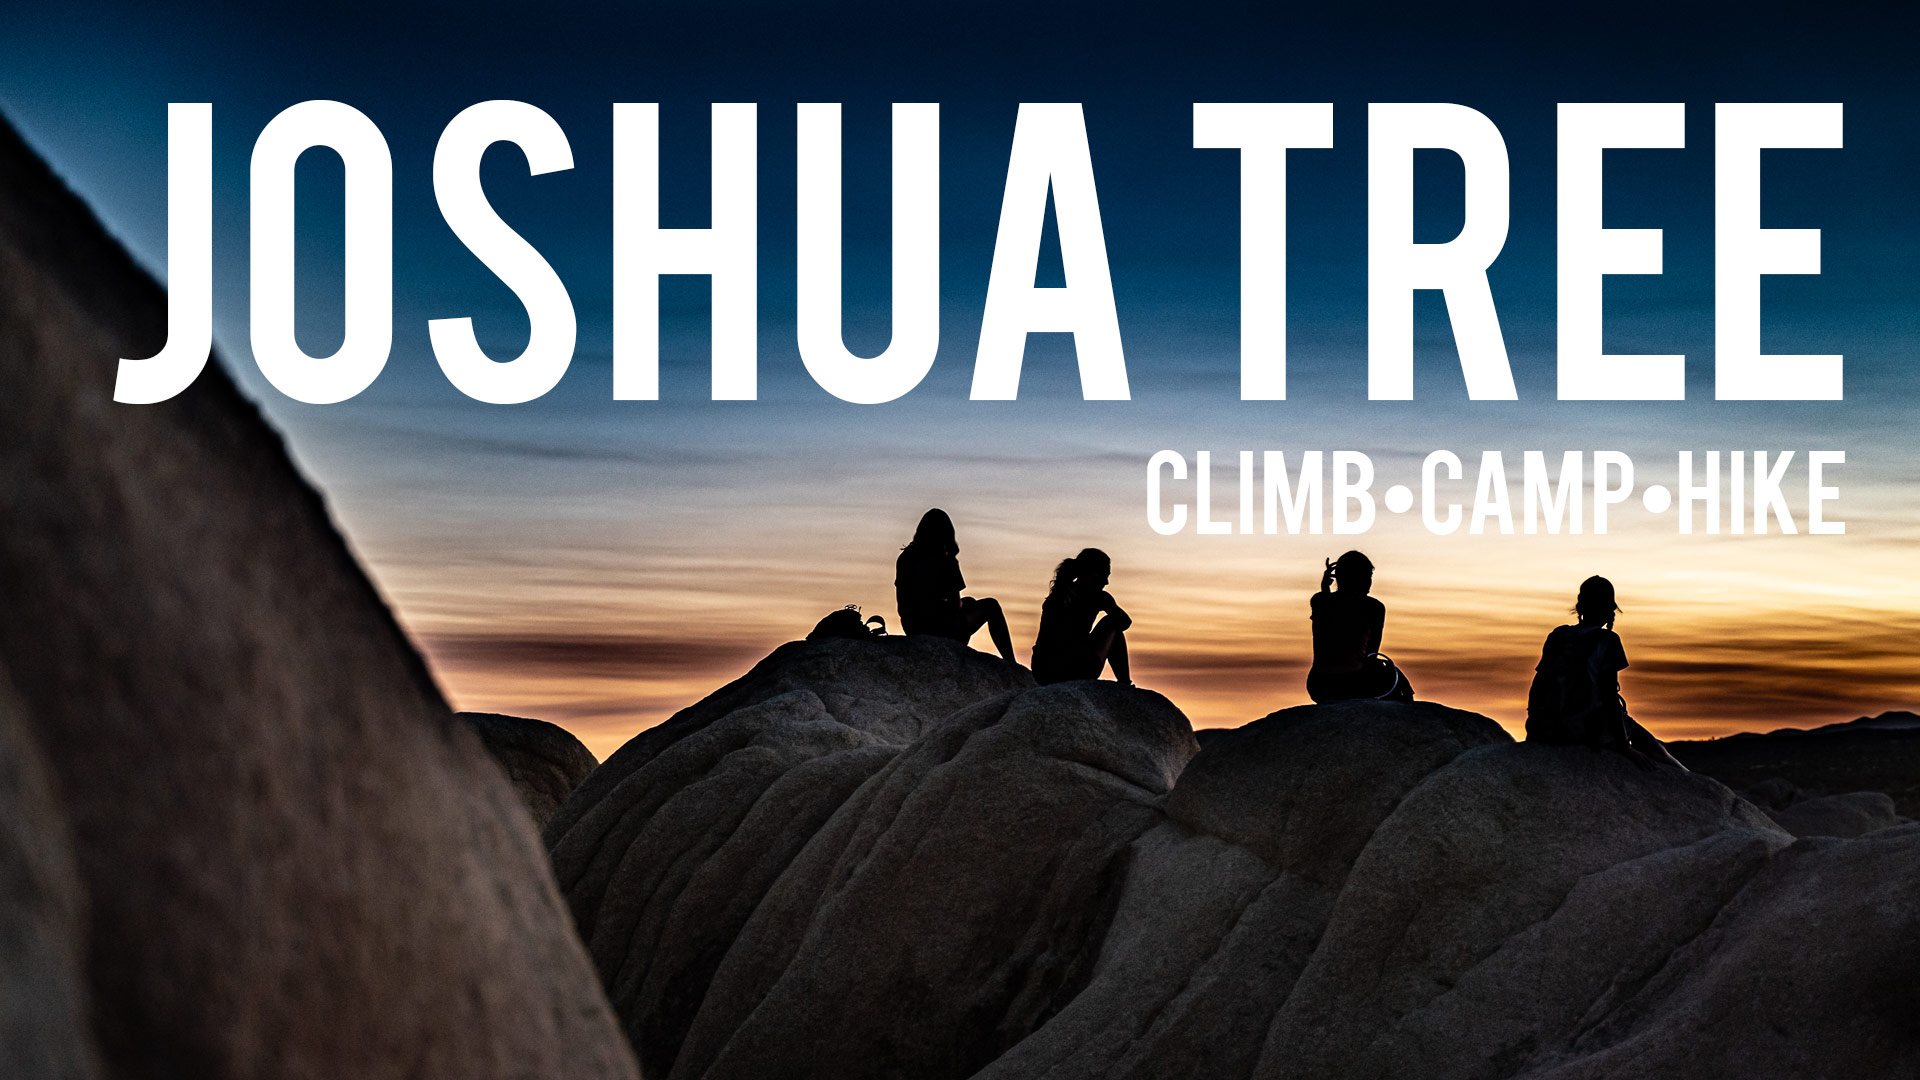 Joshua Tree – rock climbing, hiking, camping and stars with 5 teens